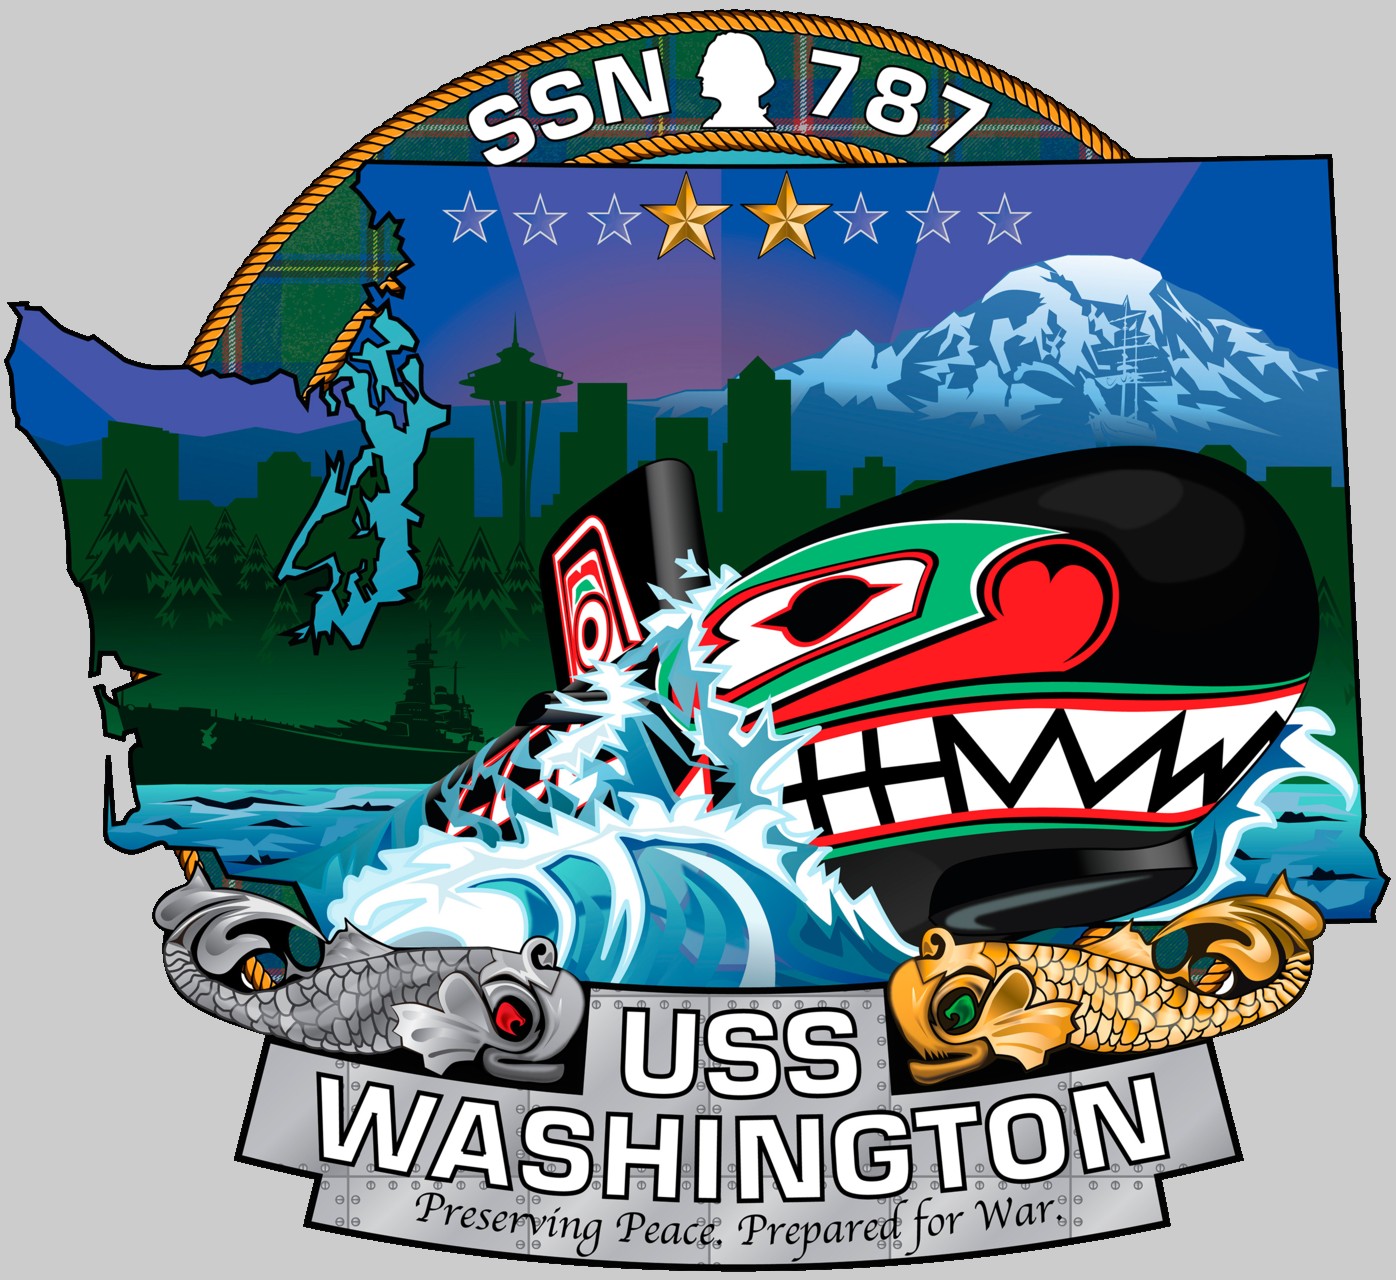 ssn-787 uss washington insignia crest patch badge virginia class attack submarine us navy 02x